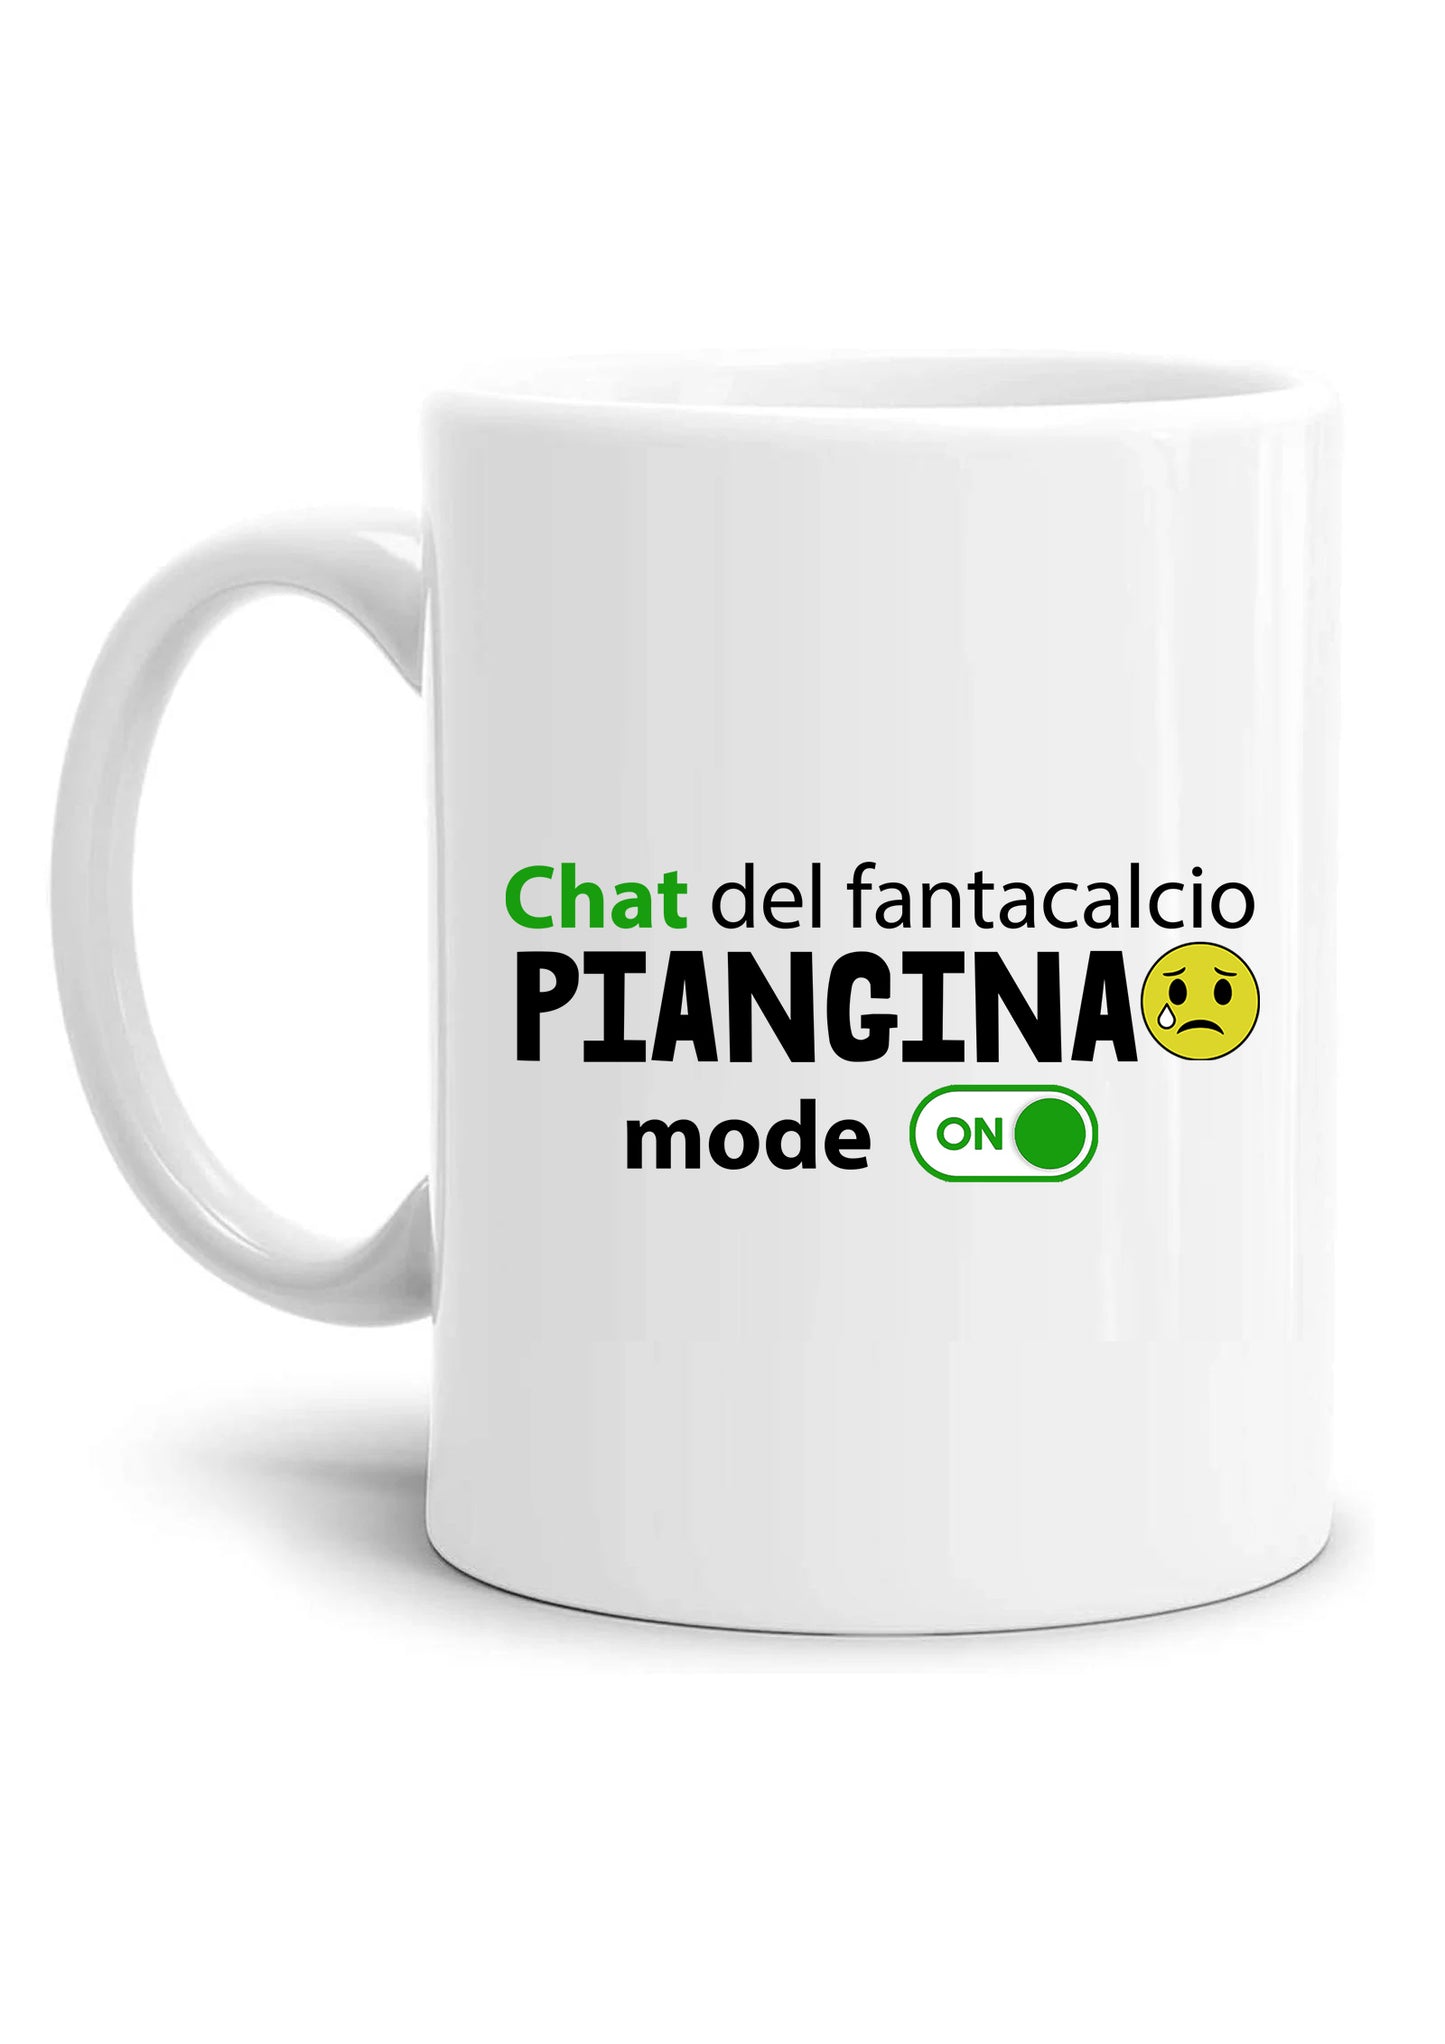 Mug-fantacalcio chat Piangina mode on fun gift idea